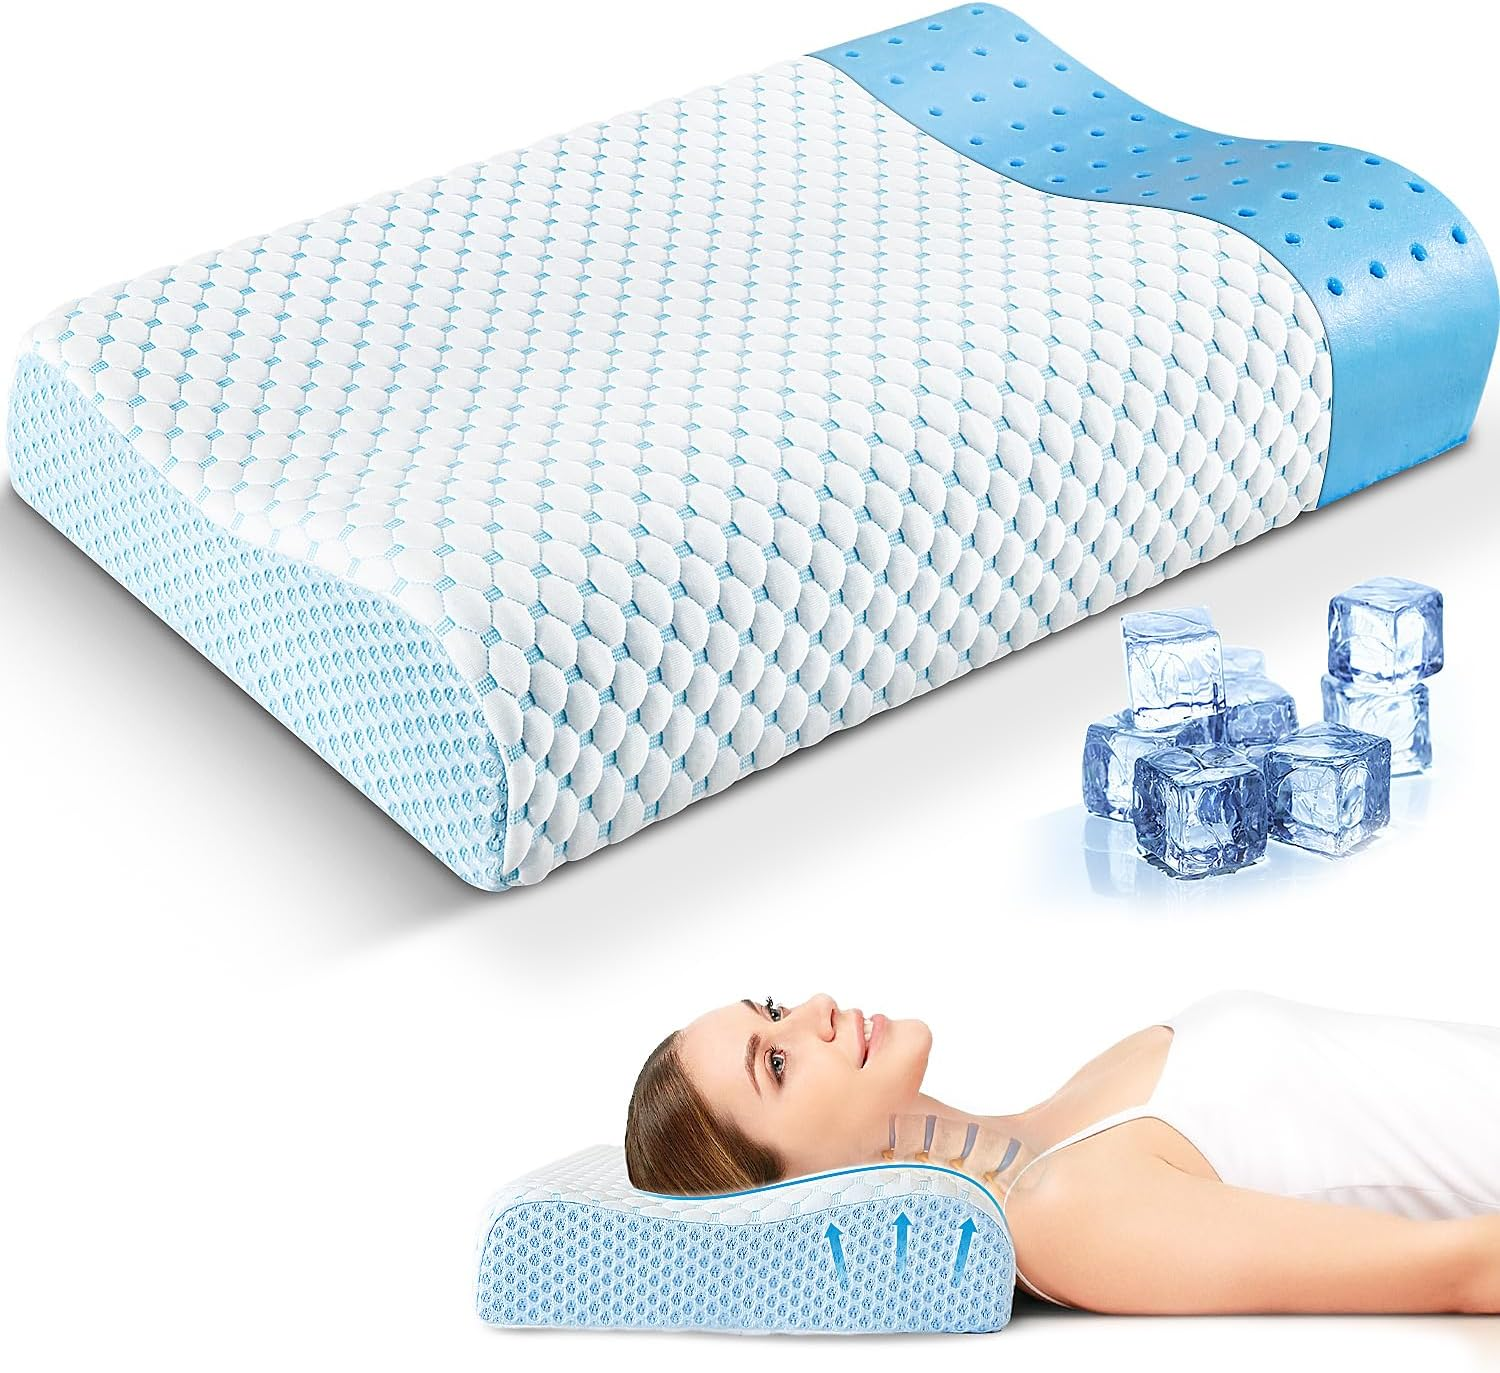  QUTOOL Shredded Memory Foam Pillows for Sleeping